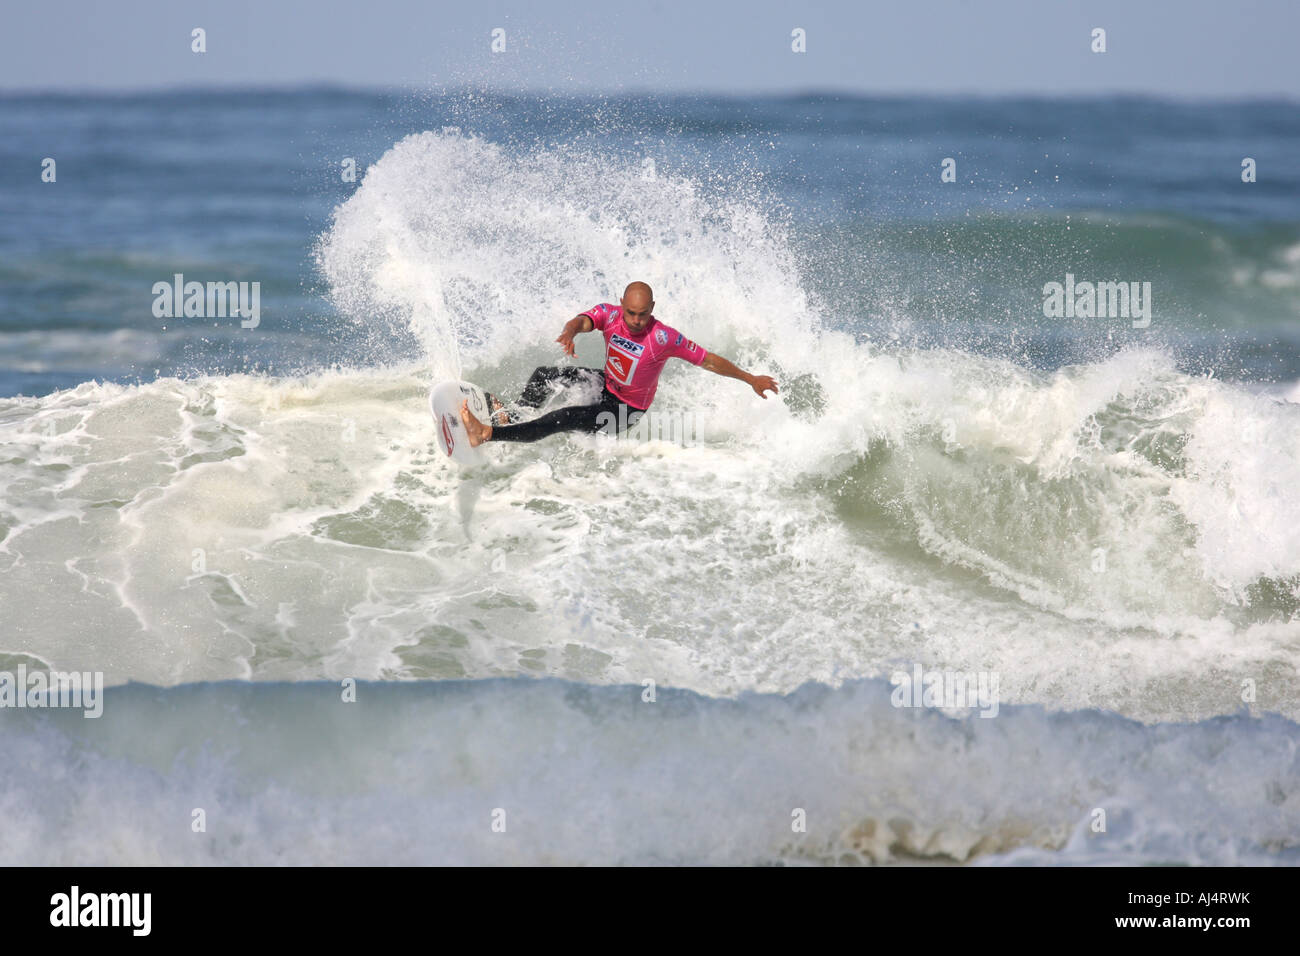 Pro Surfer Kelly Slater surfing a wave Stock Photo